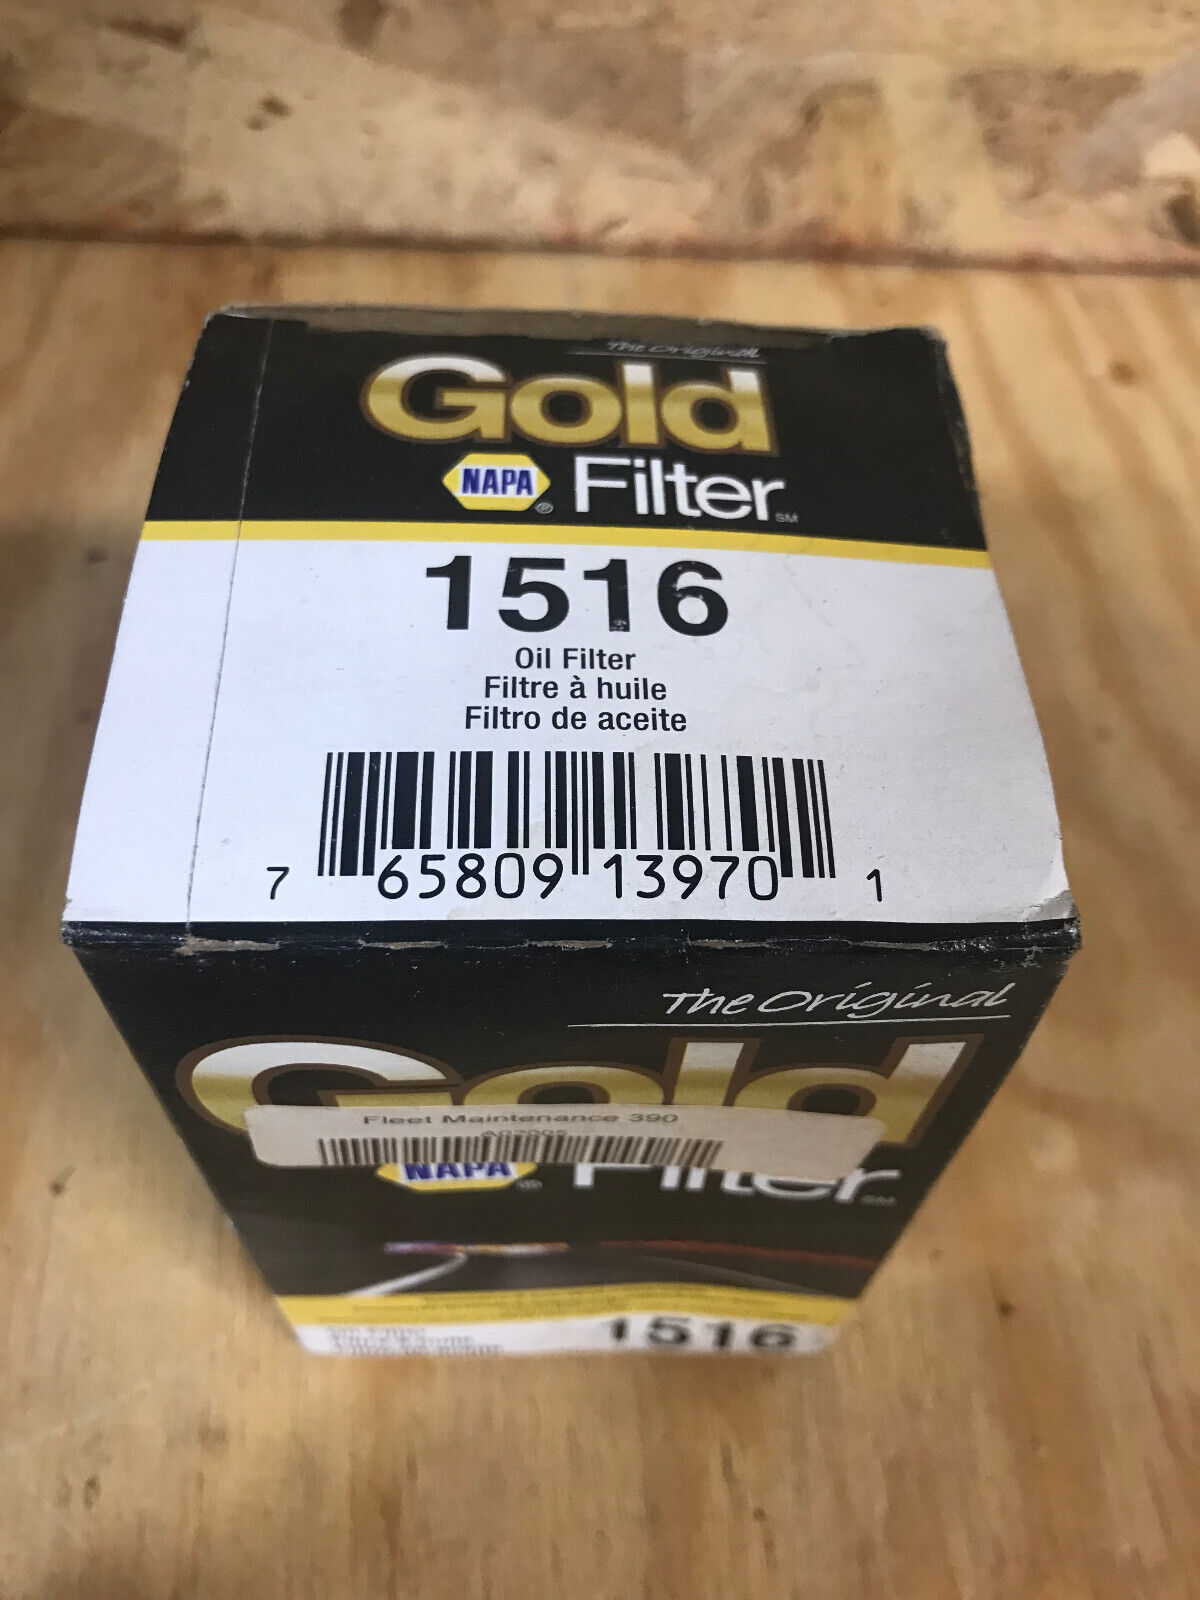 Napa Gold Oil Filter 1516 New in box